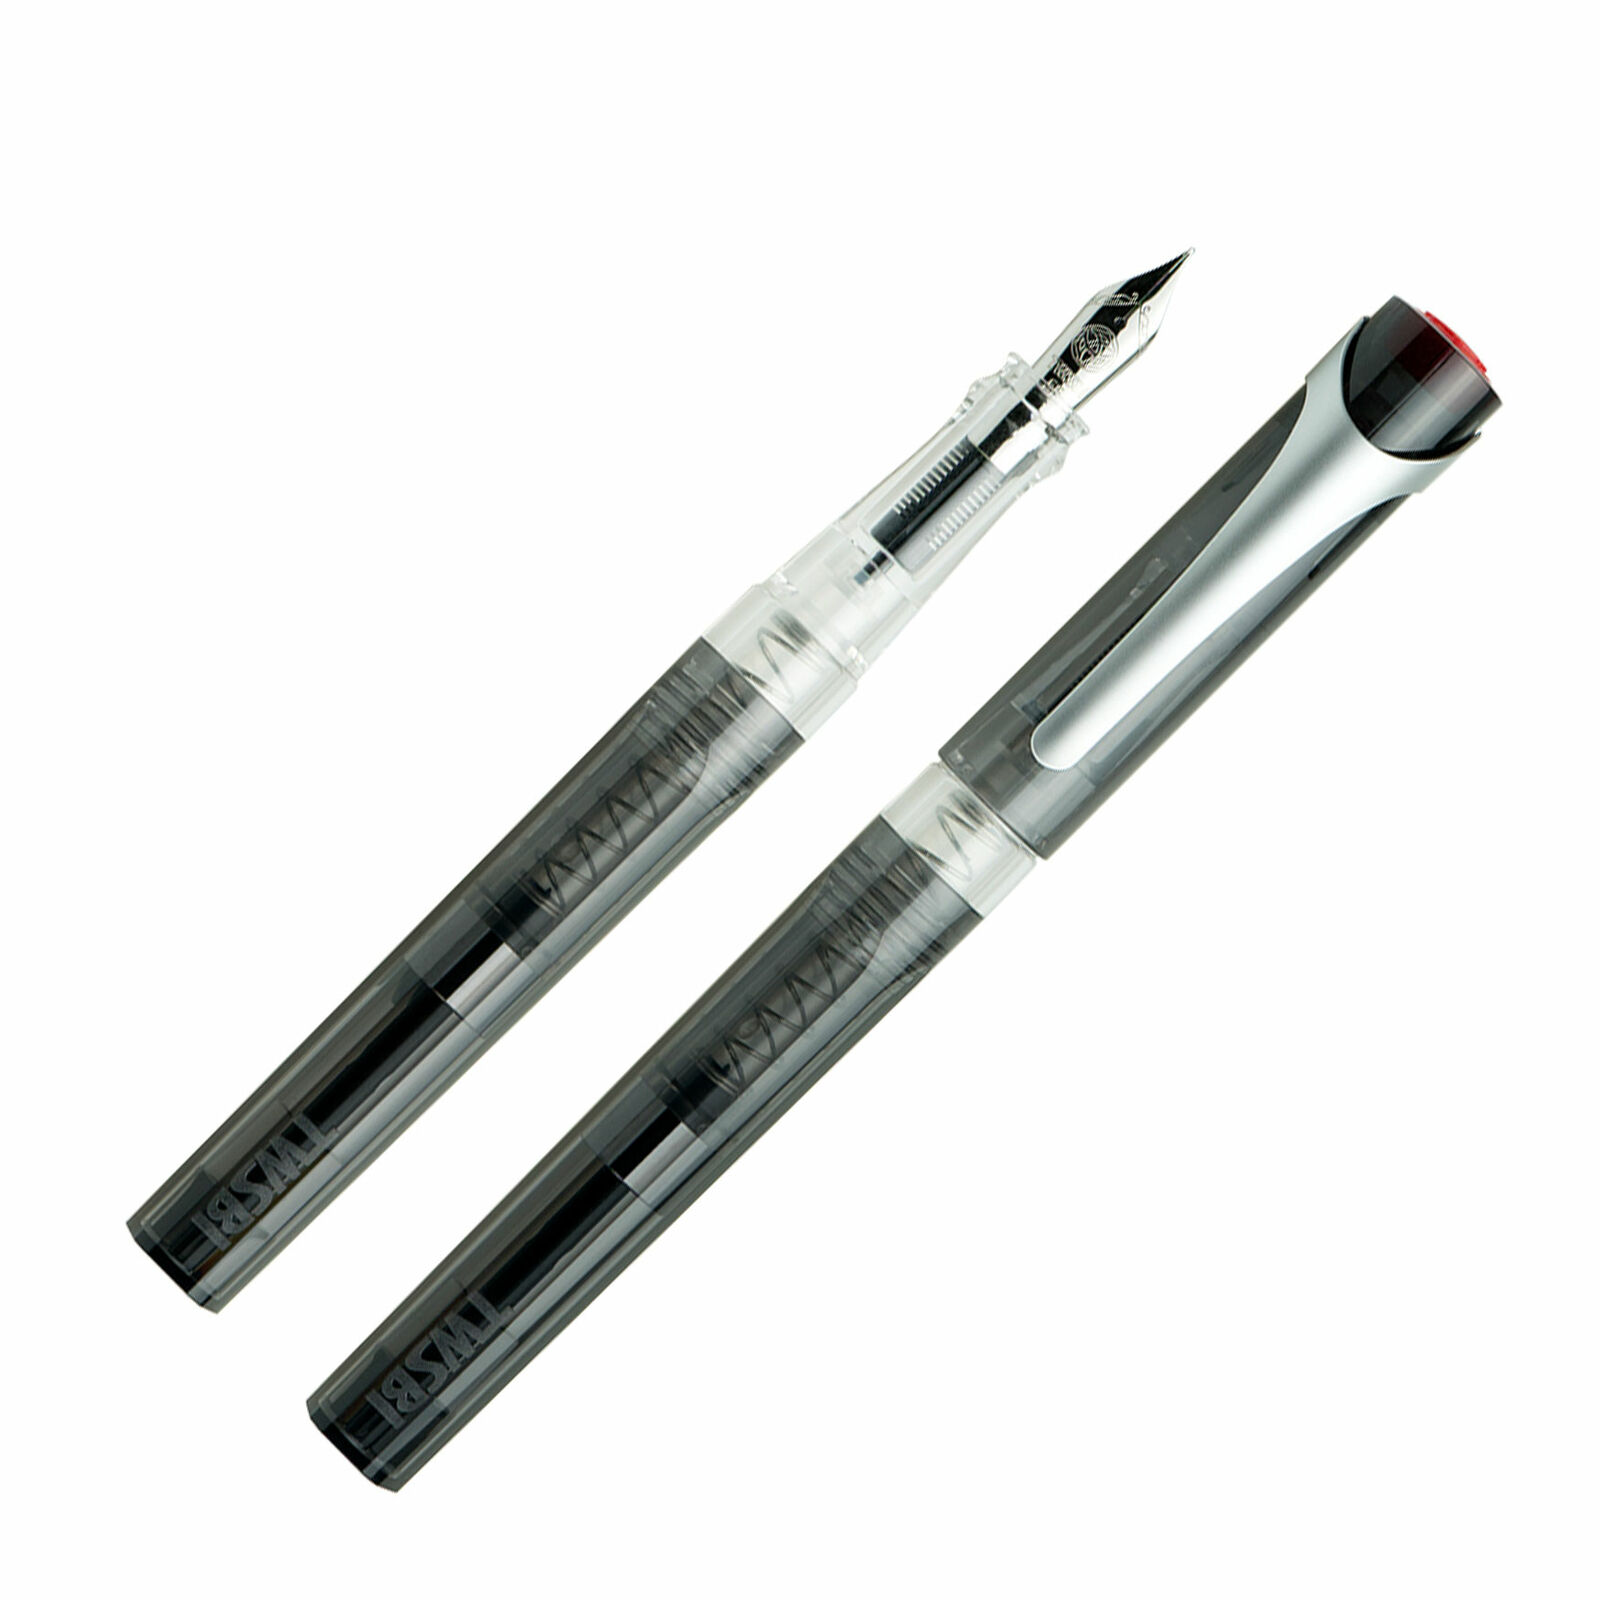 TWSBI Swipe Fountain Pen in Smoke - Medium Point - NEW in Original Box